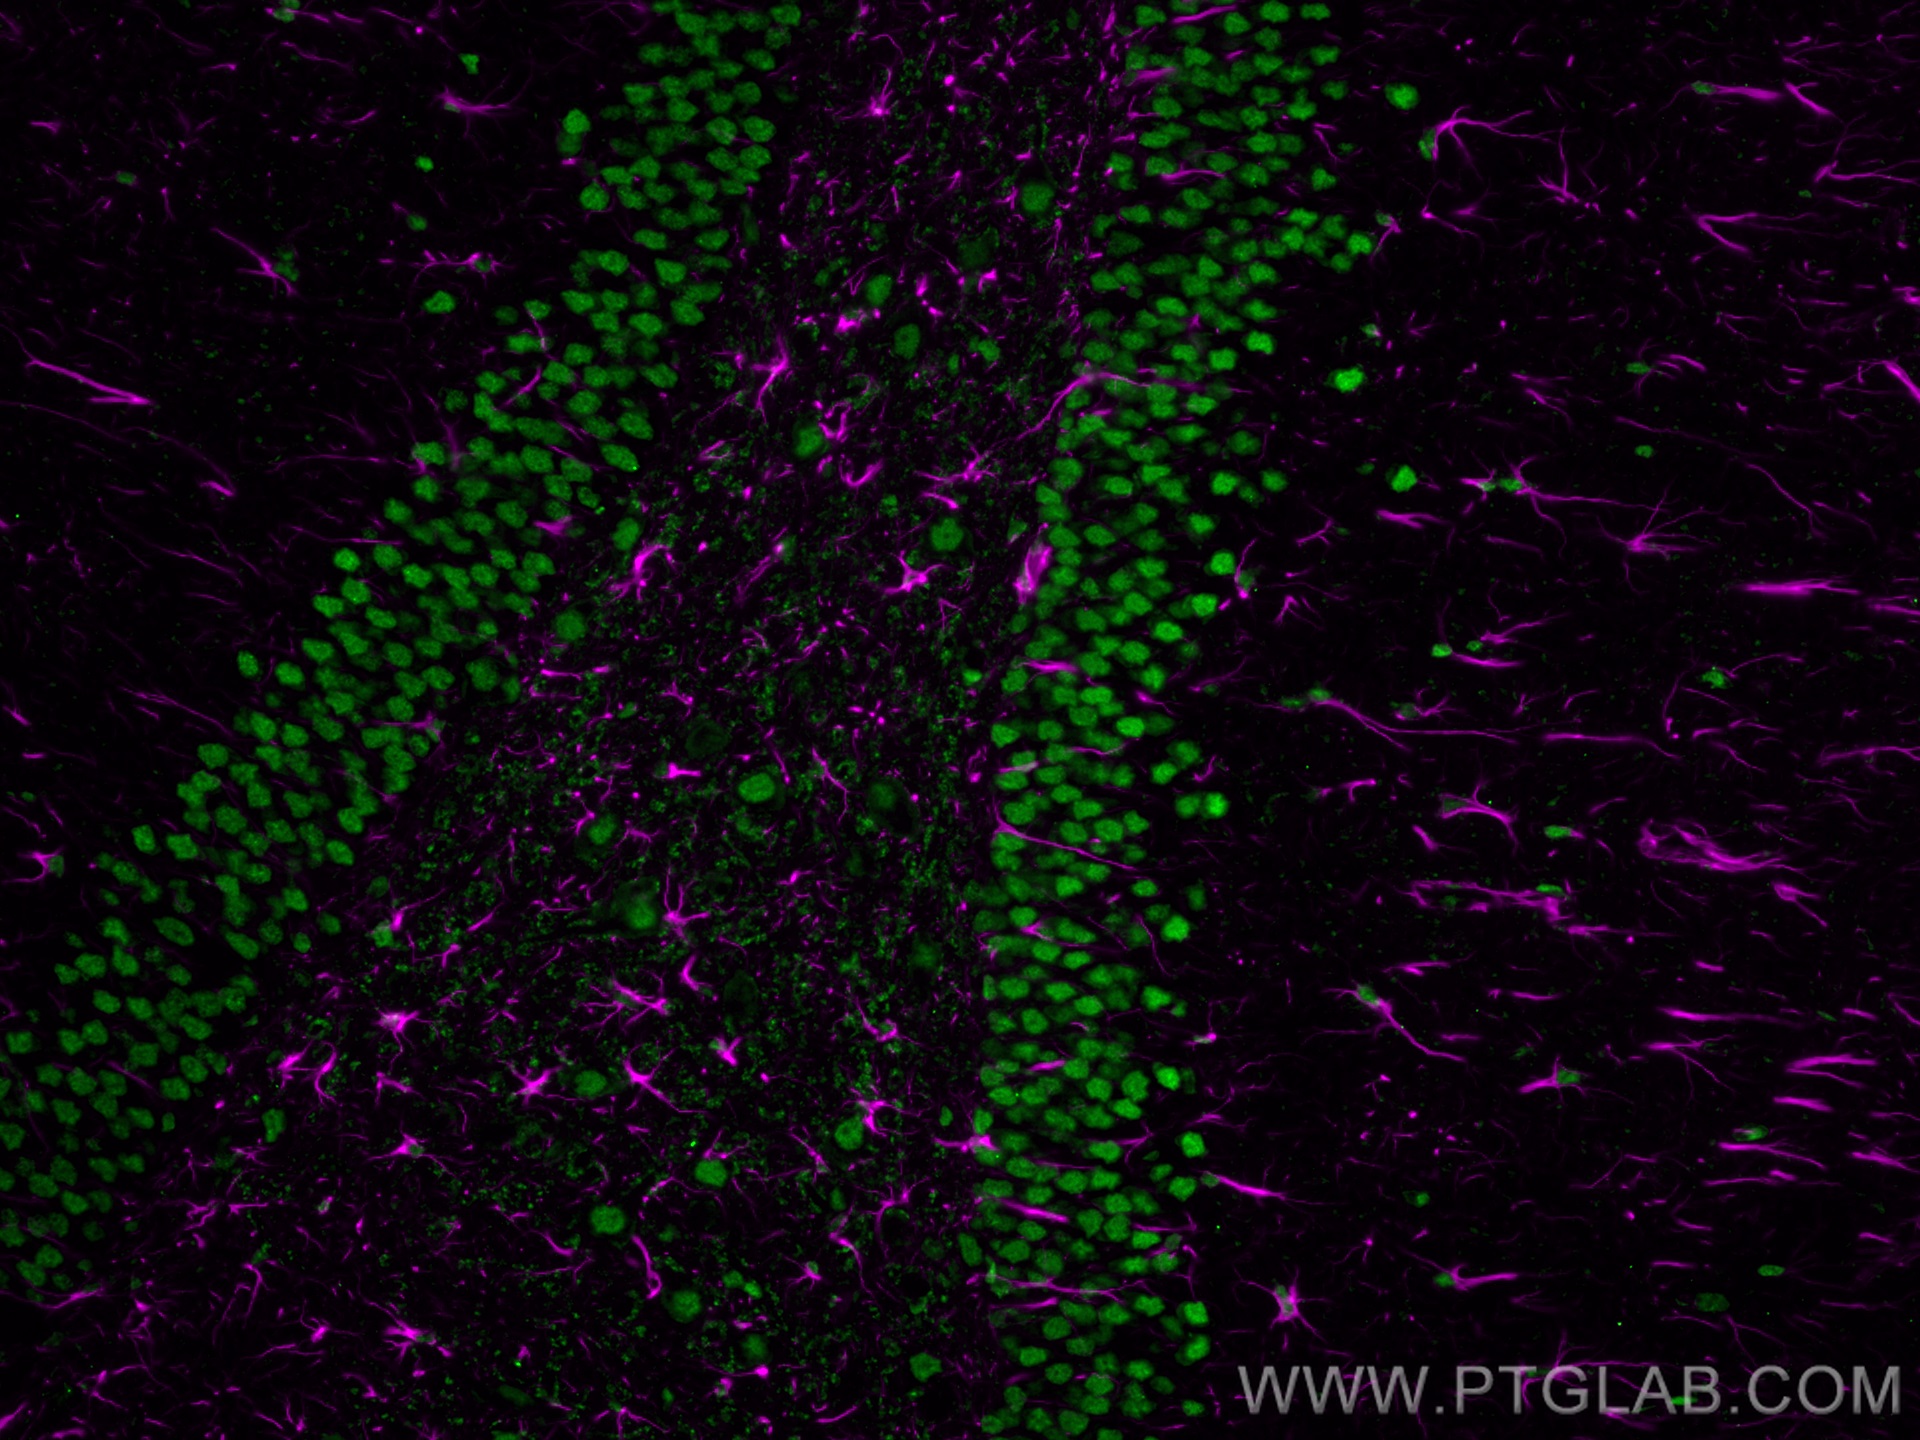 Immunofluorescence of rat brain: rat brain FFPE section was stained with Rabbit anti-GFAP polyclonal antibody (16825-1-AP, 1:200, magenta) and mouse anti-NeuN monoclonal antibody (66836-1-Ig, green). Multi-rAb CoraLite® Plus 647 conjugated Recombinant Goat anti-rabbit secondary antibody (RGAR005, 1:500) and Multi-rAb CoraLite® Plus 488 conjugated Goat Anti-Mouse Recombinant Secondary Antibody (H+L) were used for detection (RGAM002, 1:500) . 